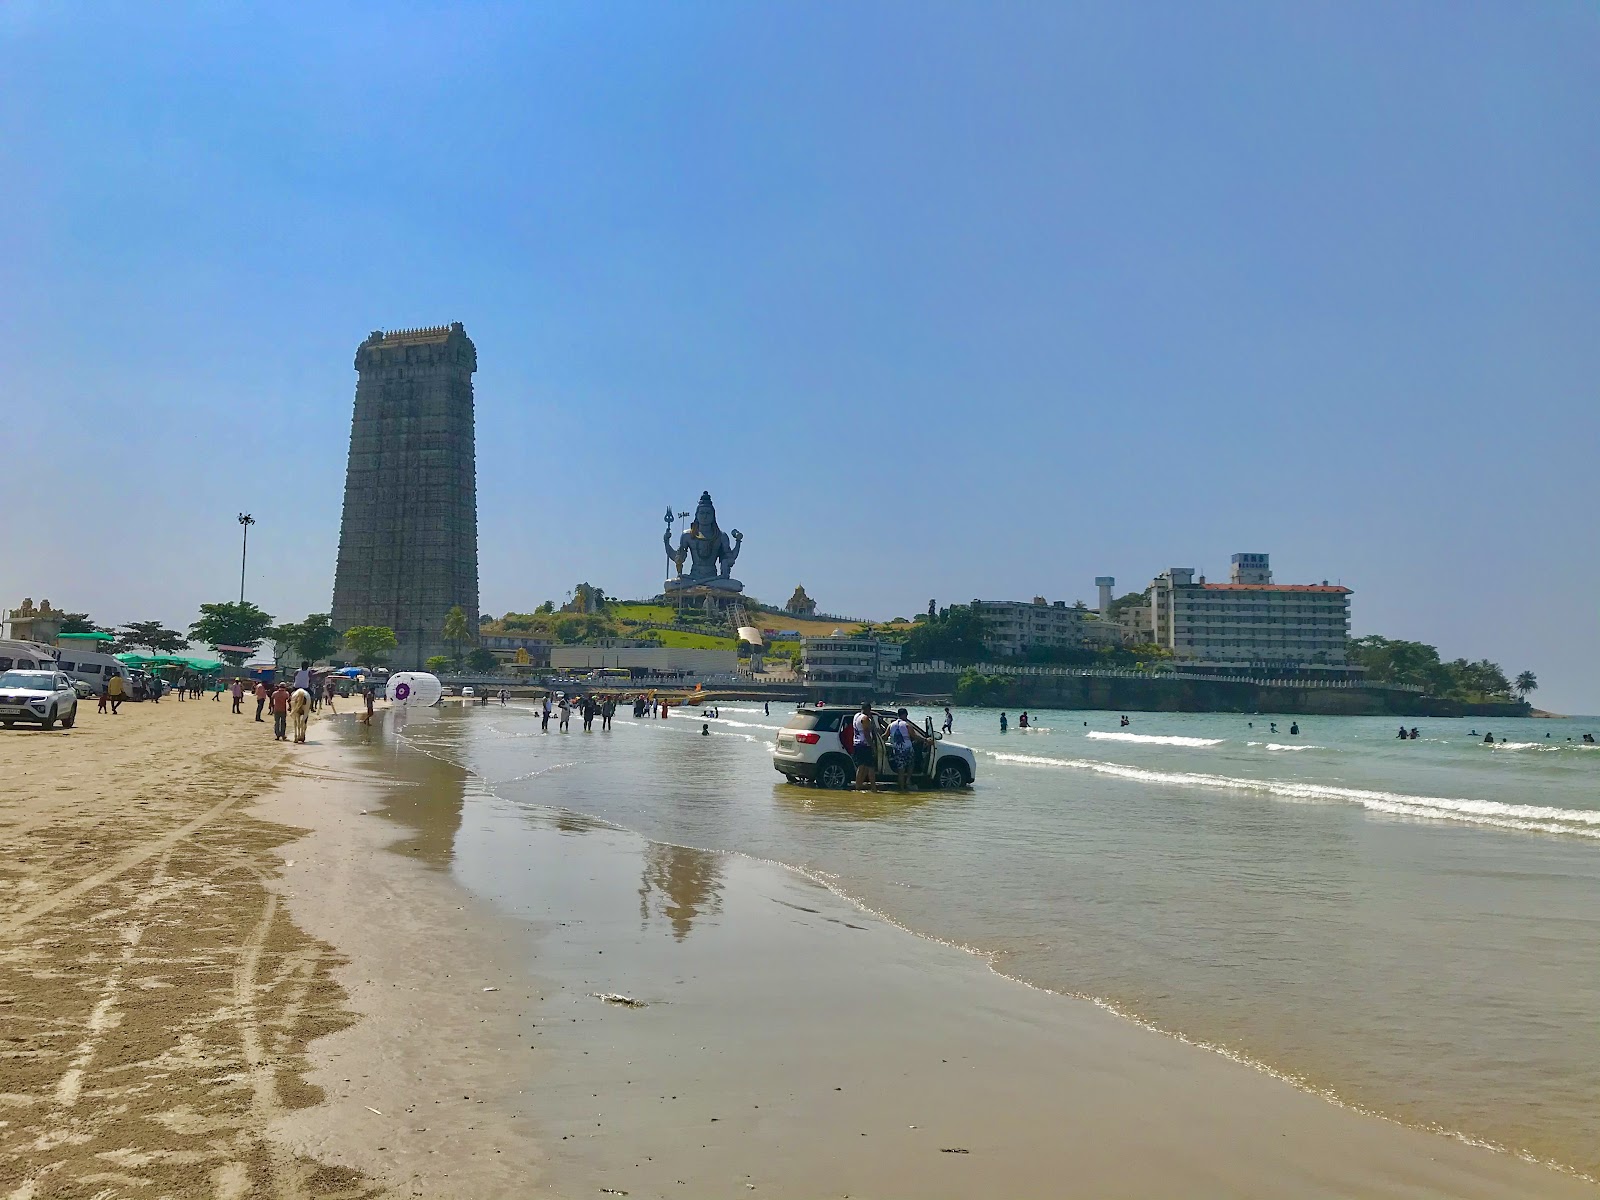 Foto de Murudeshwara Beach - lugar popular entre os apreciadores de relaxamento